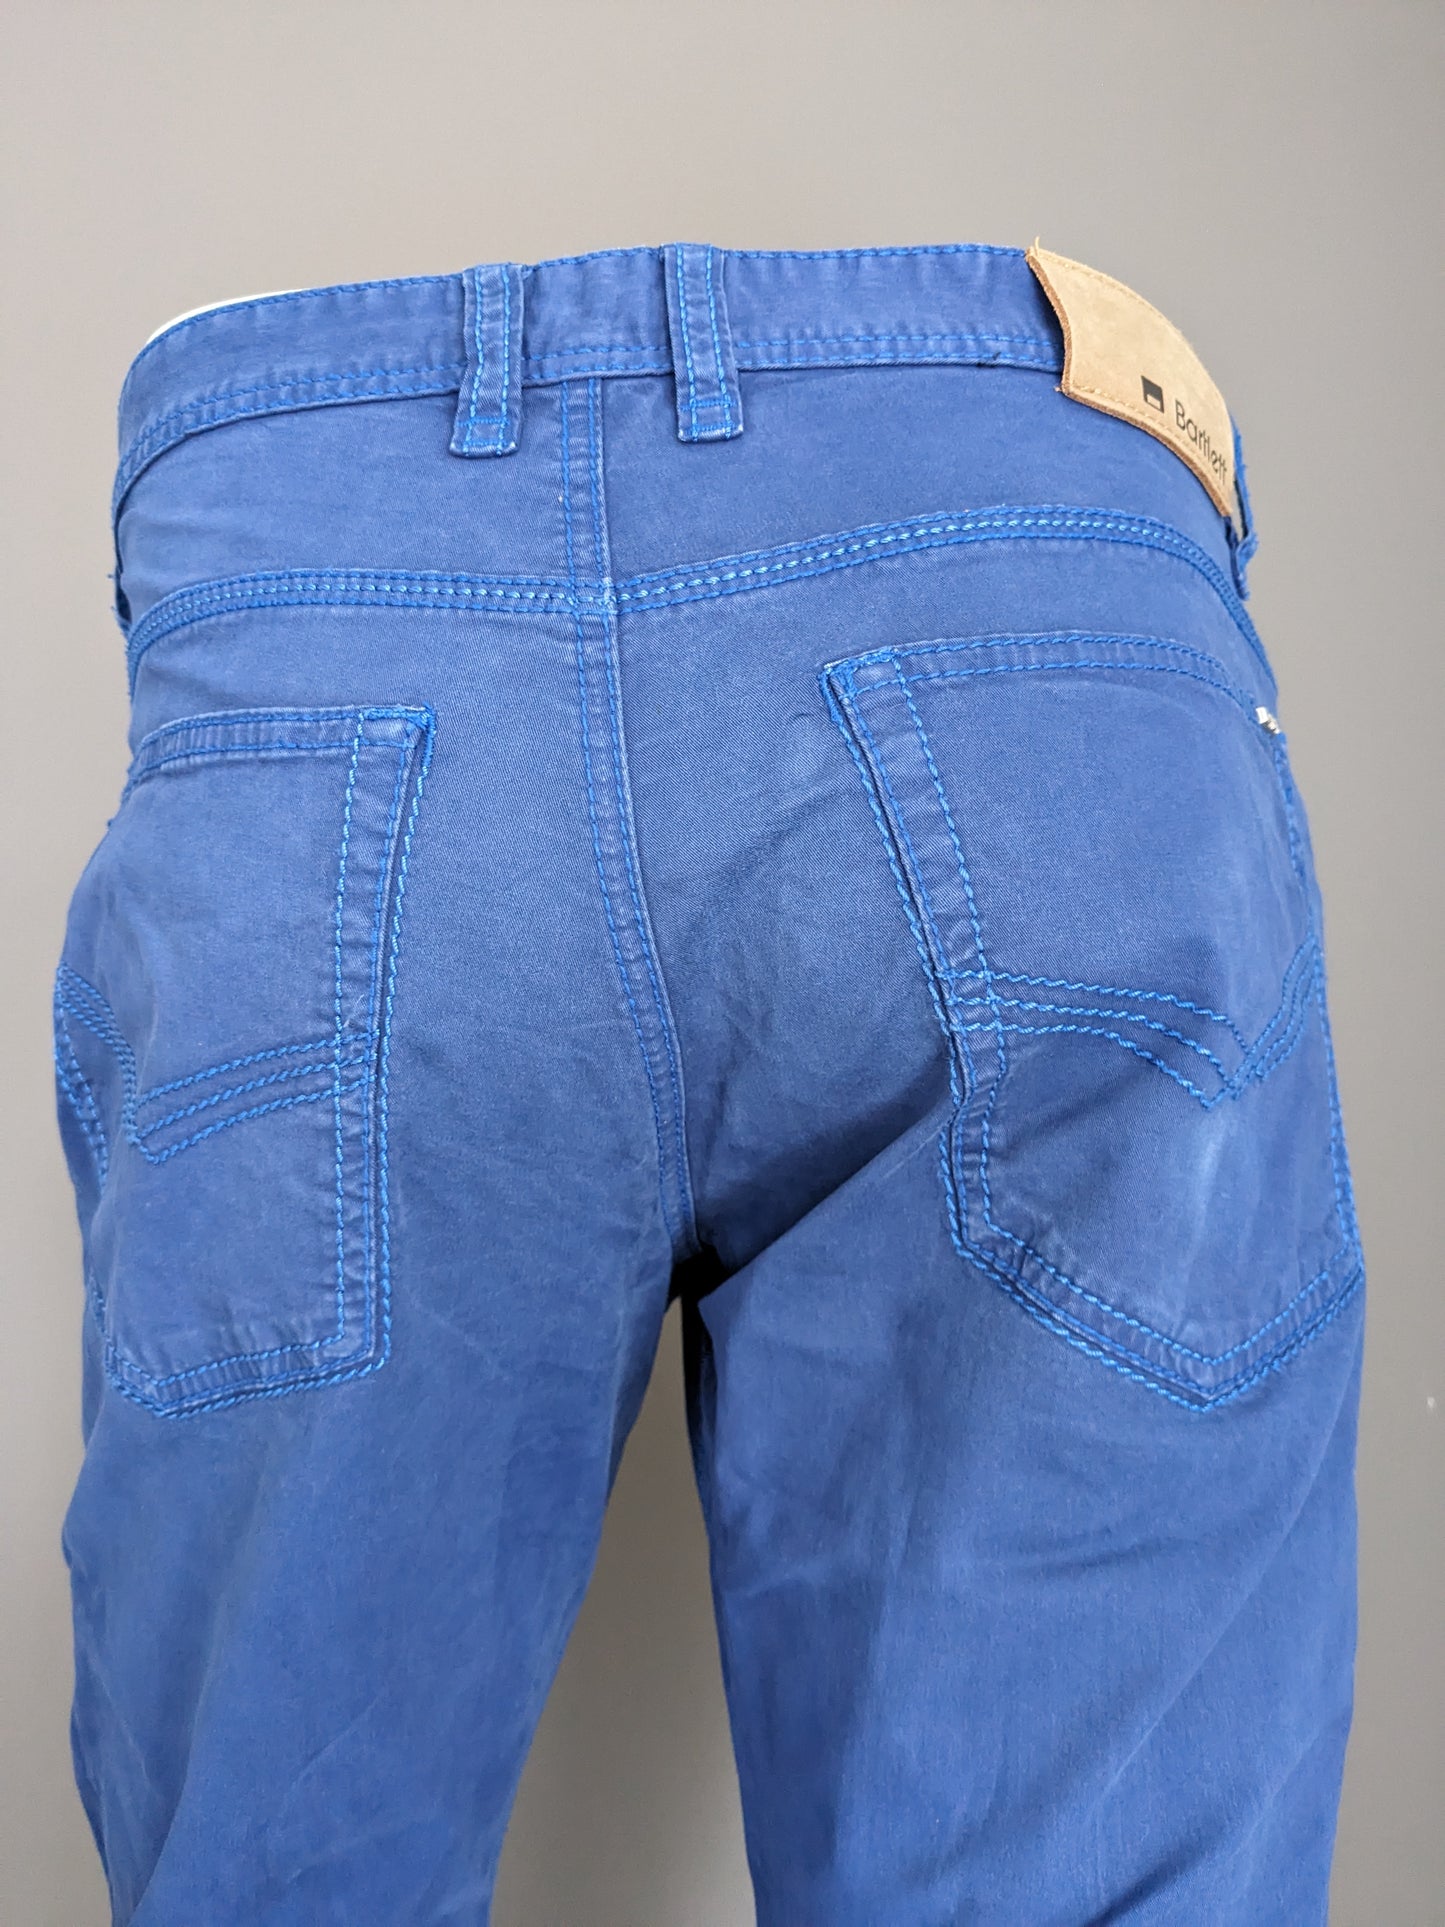 Pantaloni / pantaloni Bartlett. Blu. Dimensione 24 (48) / m